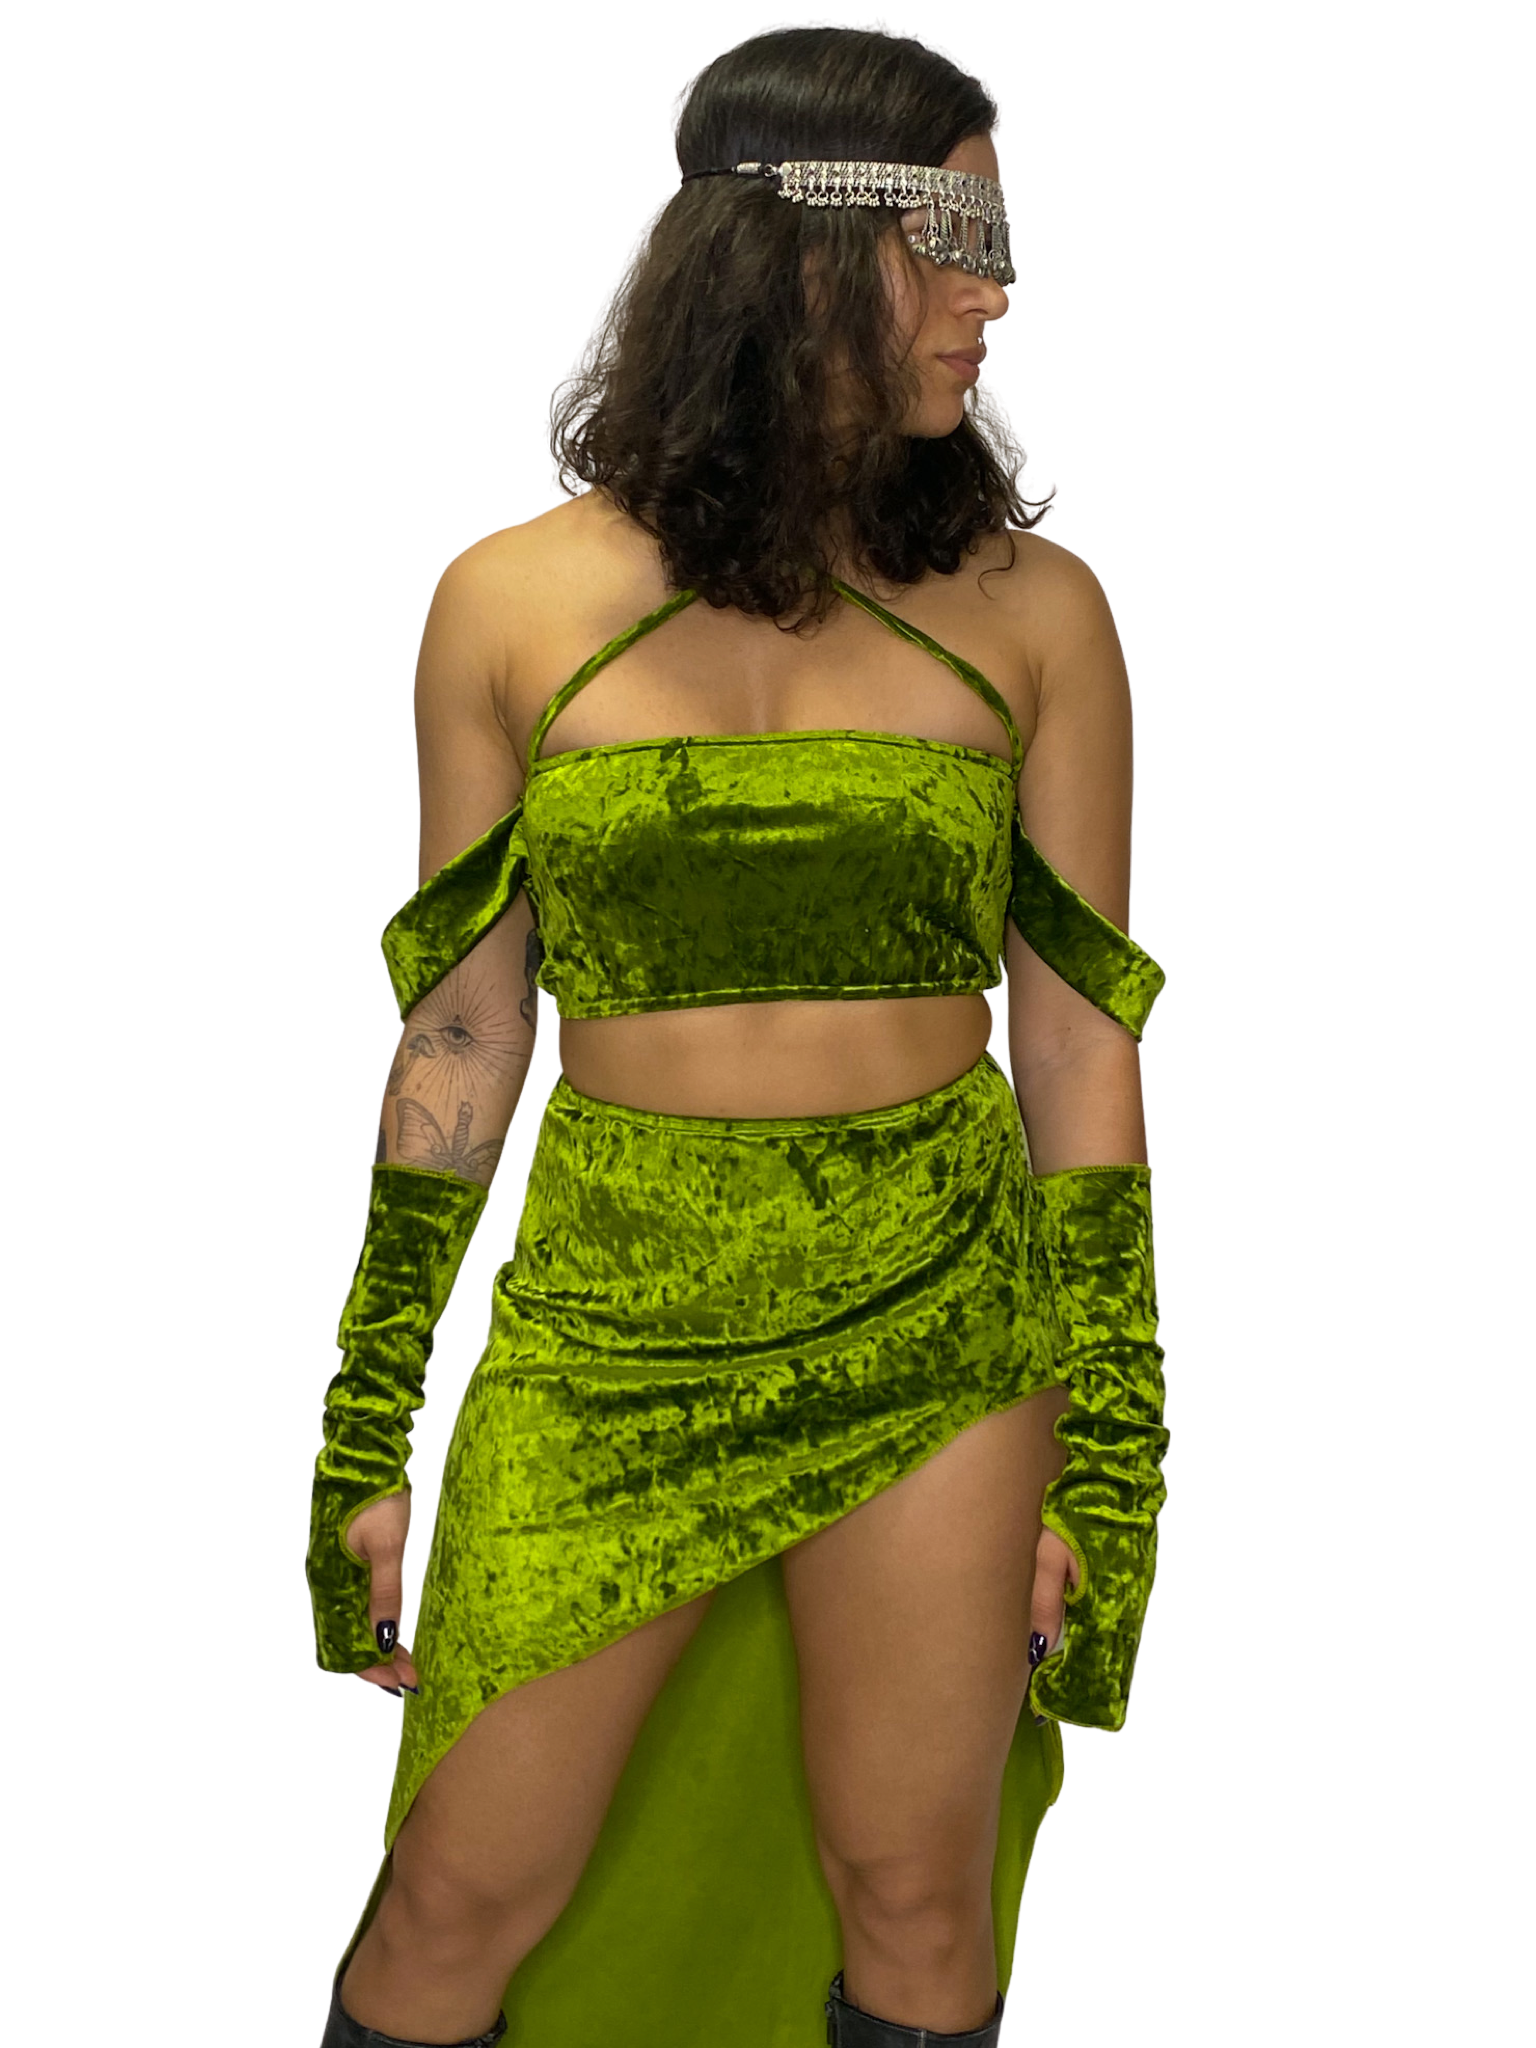 Diosa Olive Green Crushed Velvet Arm Sleeves arm sleeves oraingopartners   